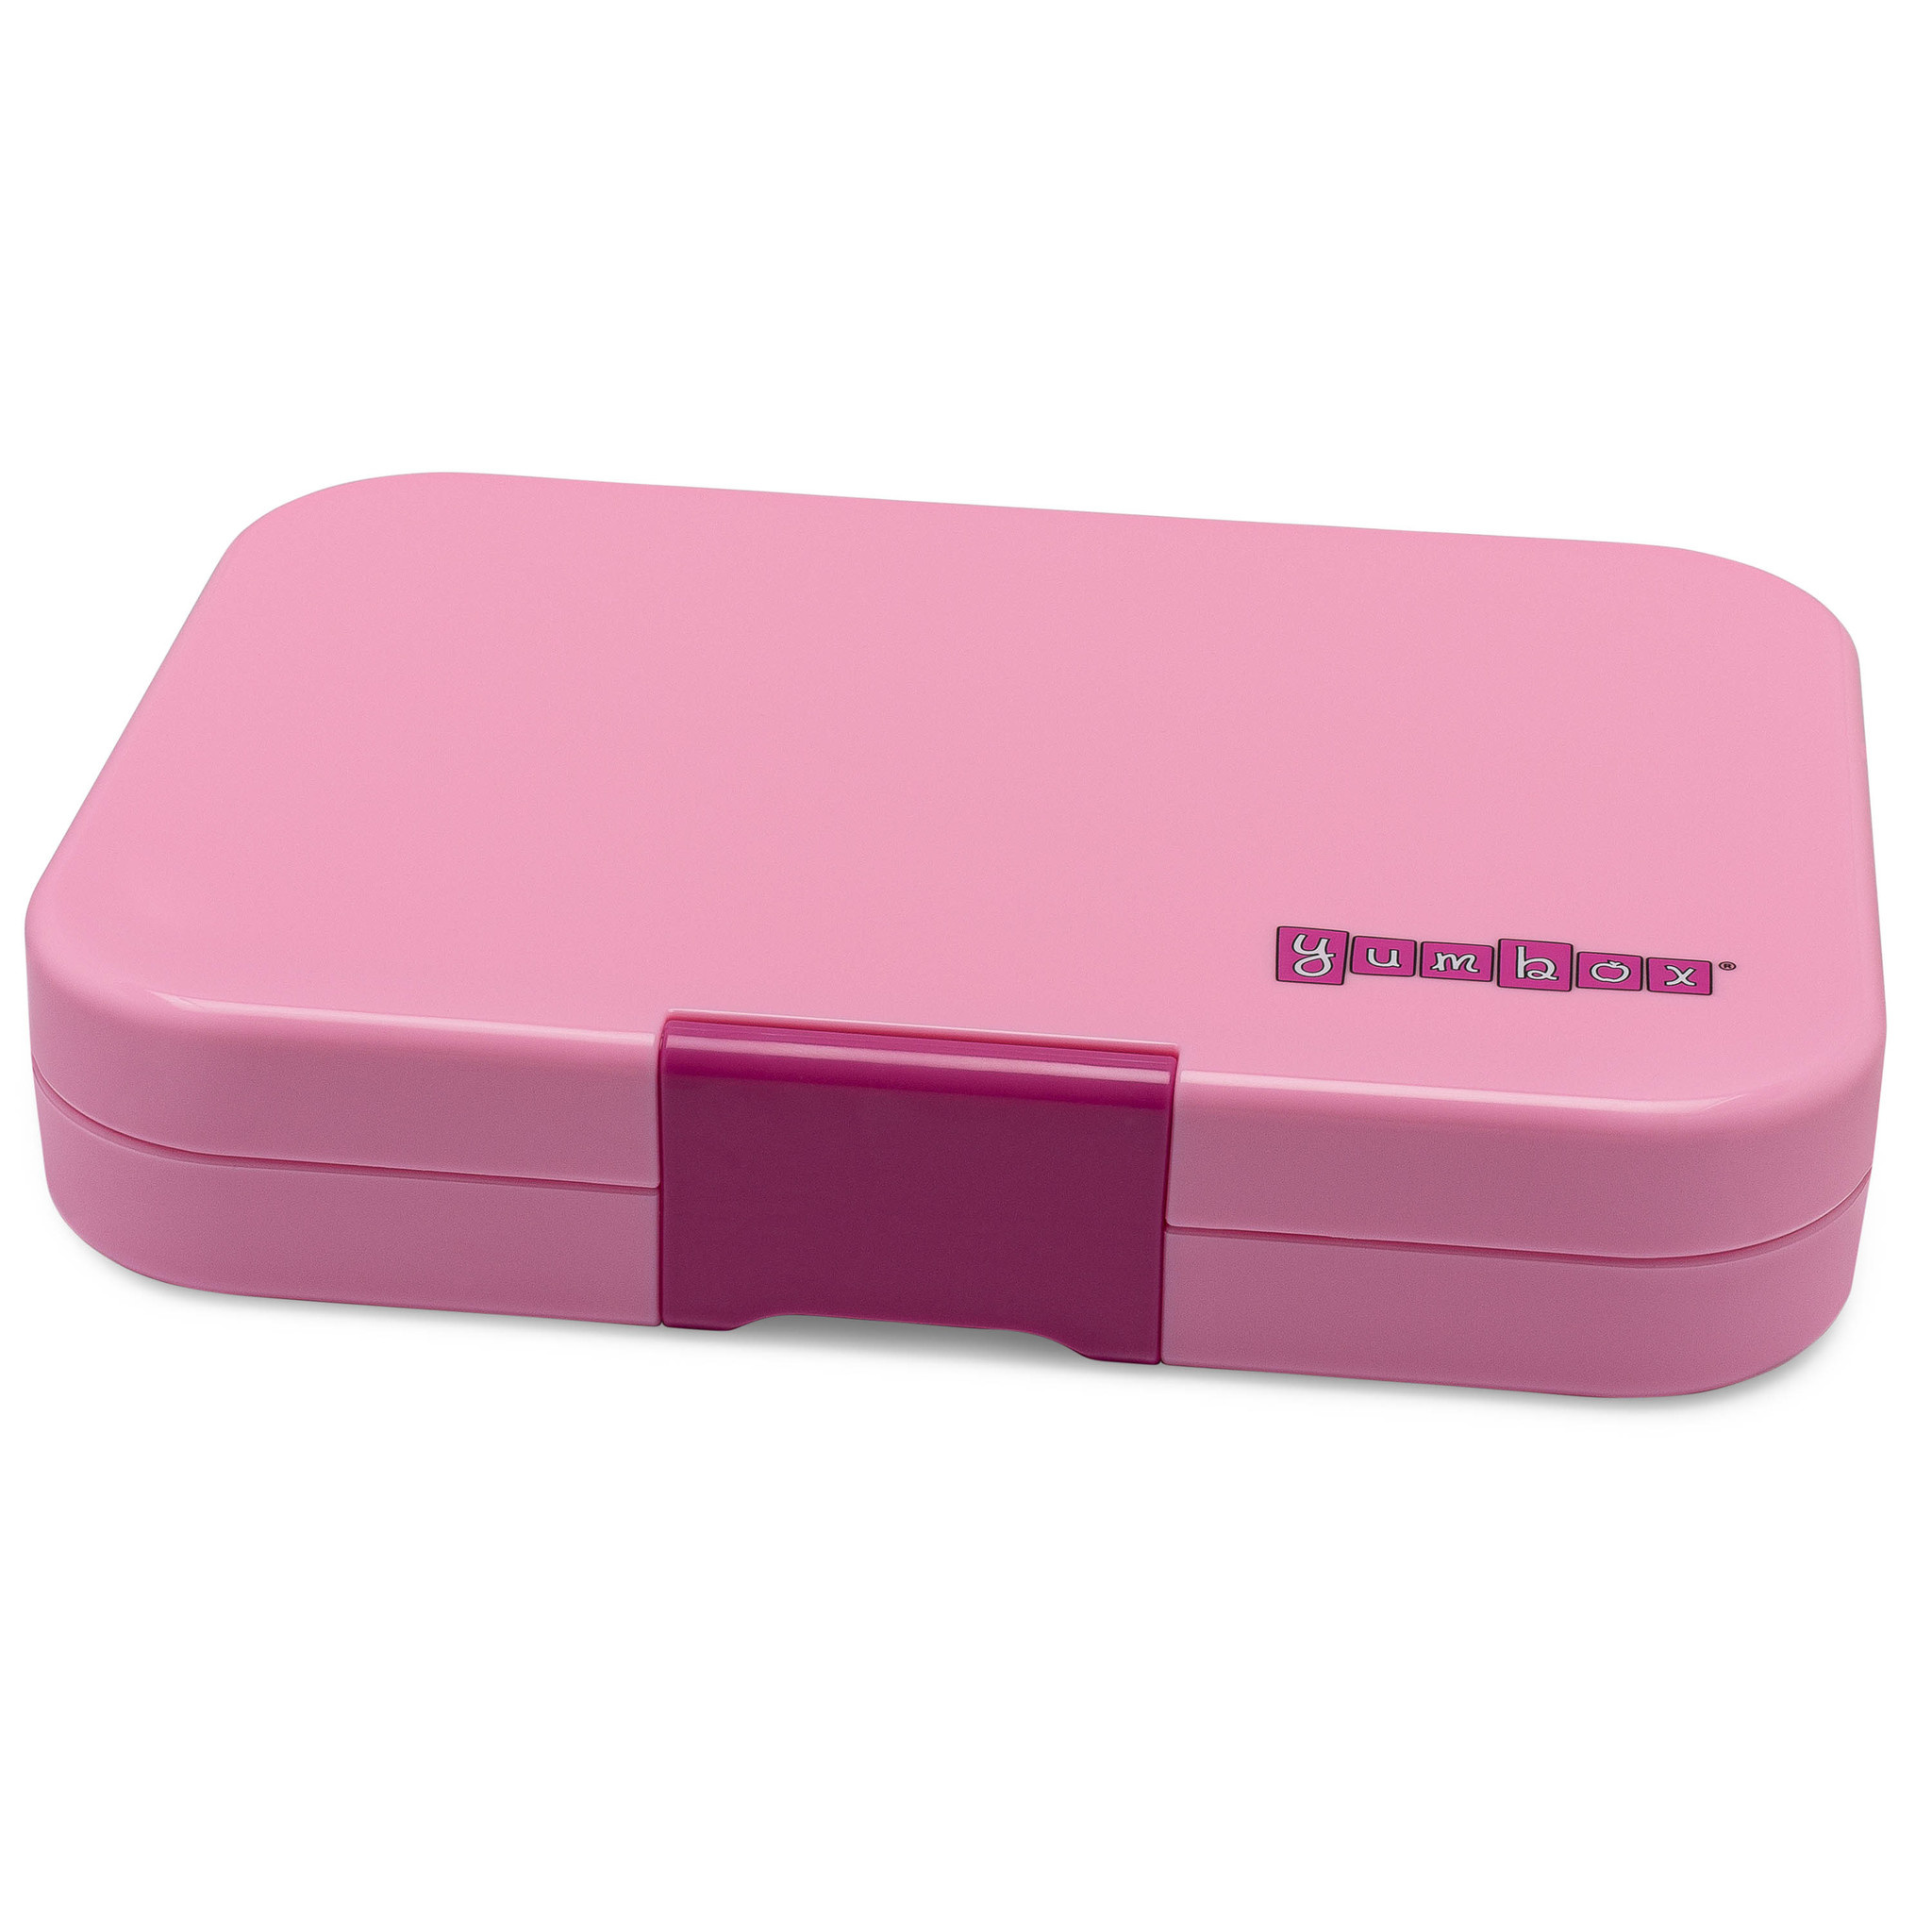 Yumbox Tapas XL exterior box - Capri Pink - WITHOUT TRAY-1